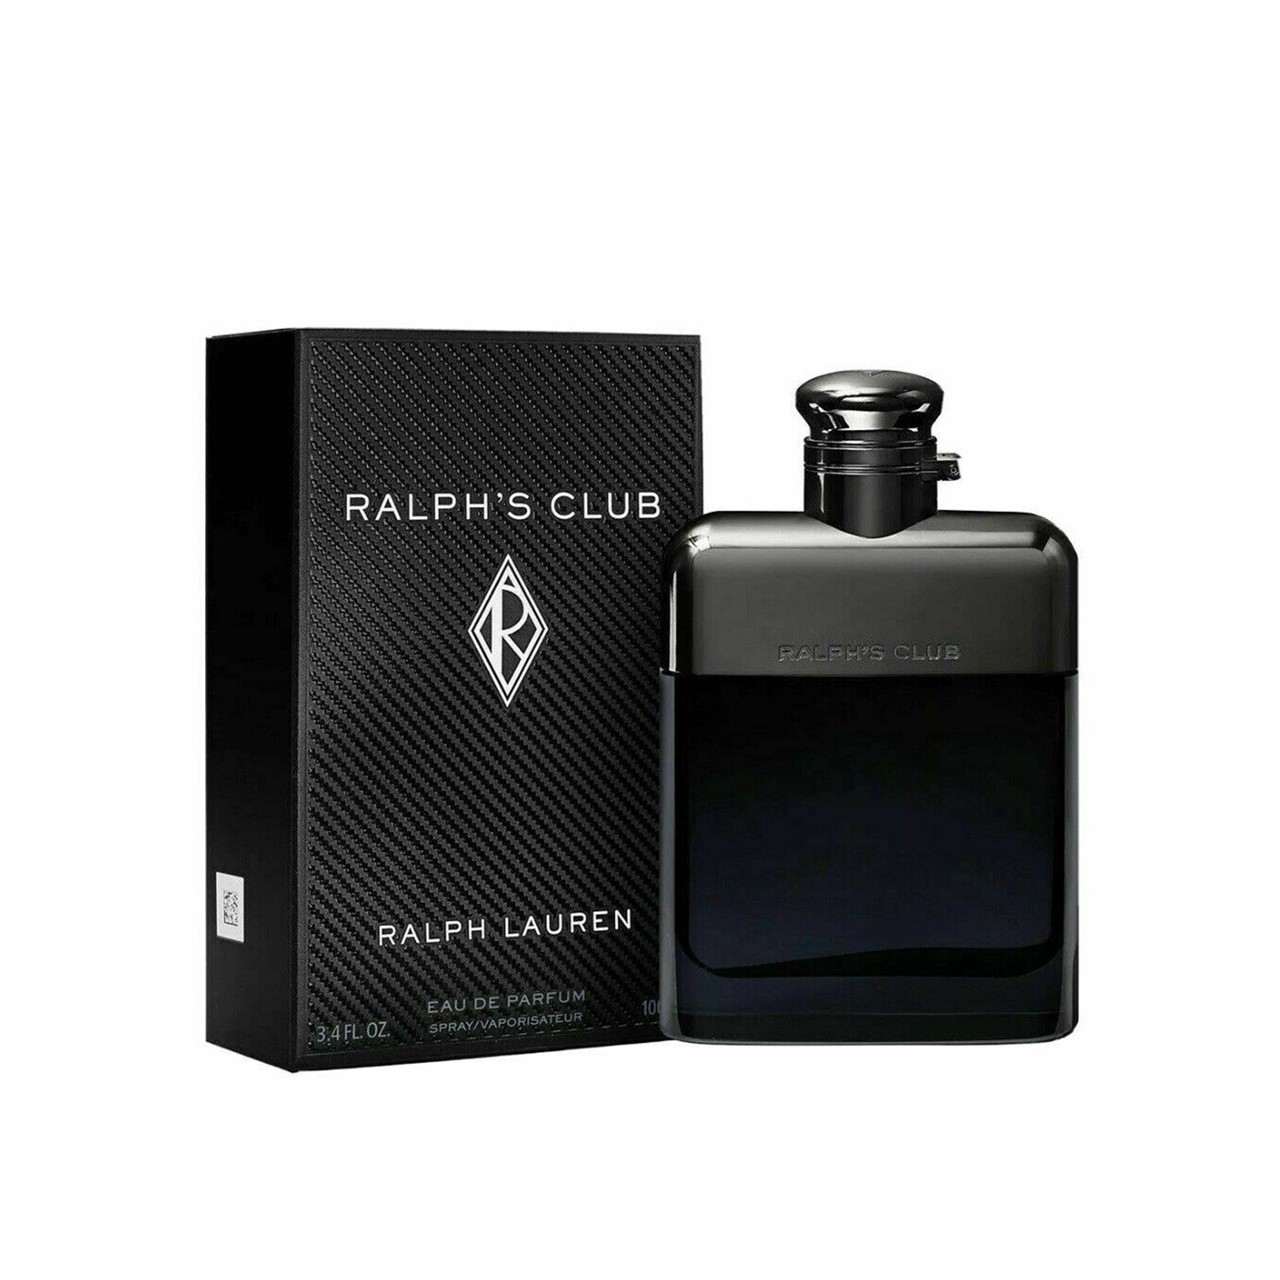 Buy Ralph Lauren Ralph's Club Eau de Parfum For Men · USA